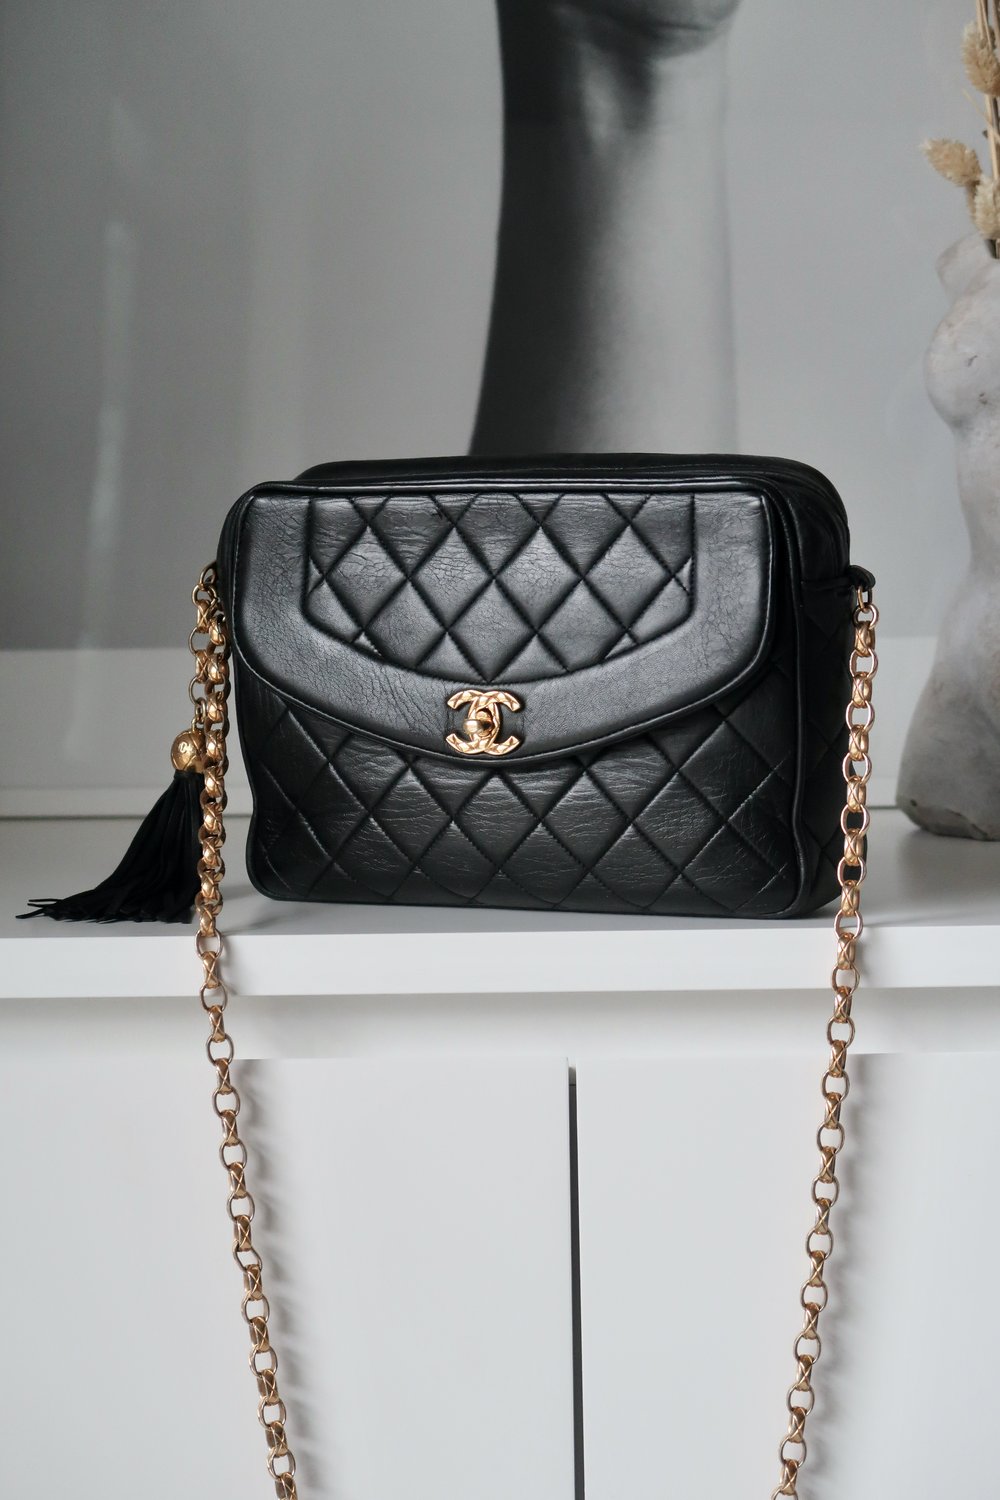 Chanel Vintage Black Bag — Blaise Ruby Loves